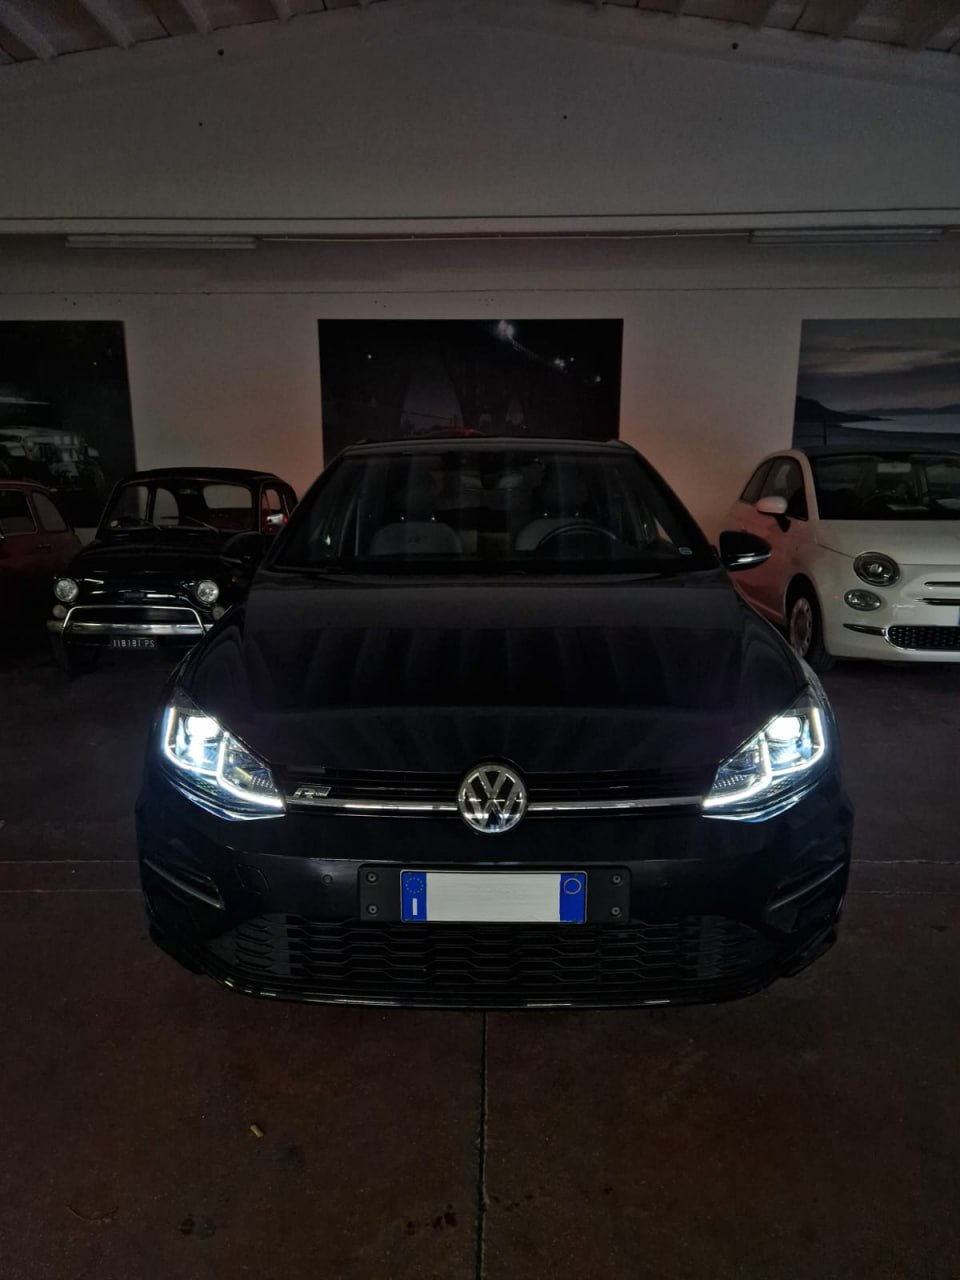 FARI ANTERIORI ADATTI PER VW GOLF 7/7.5 2017-2020 LOOK RLINE LED DINAMICI